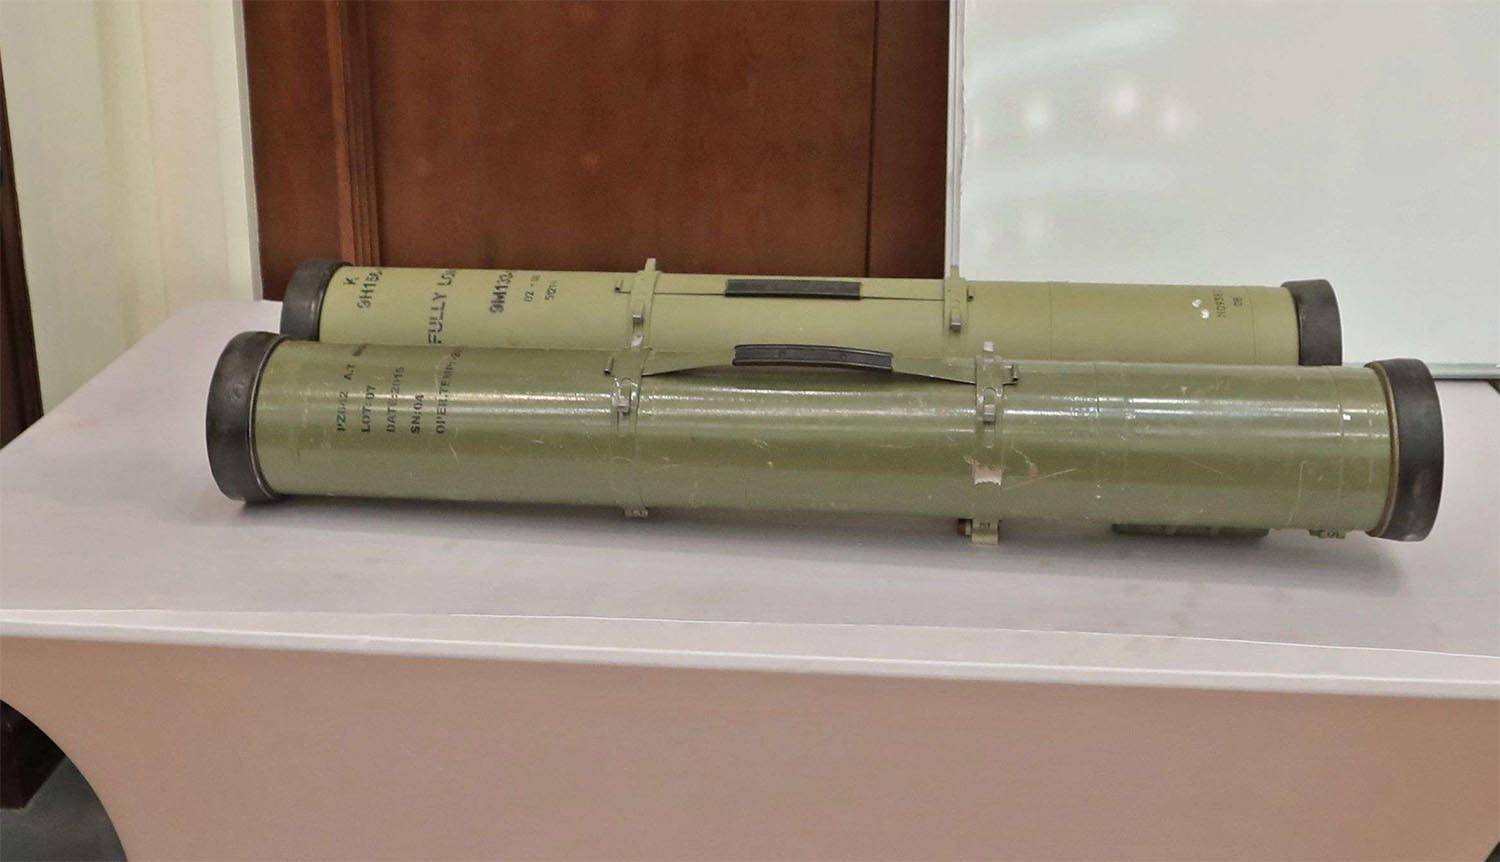 Iranian-made anti-tank missiles